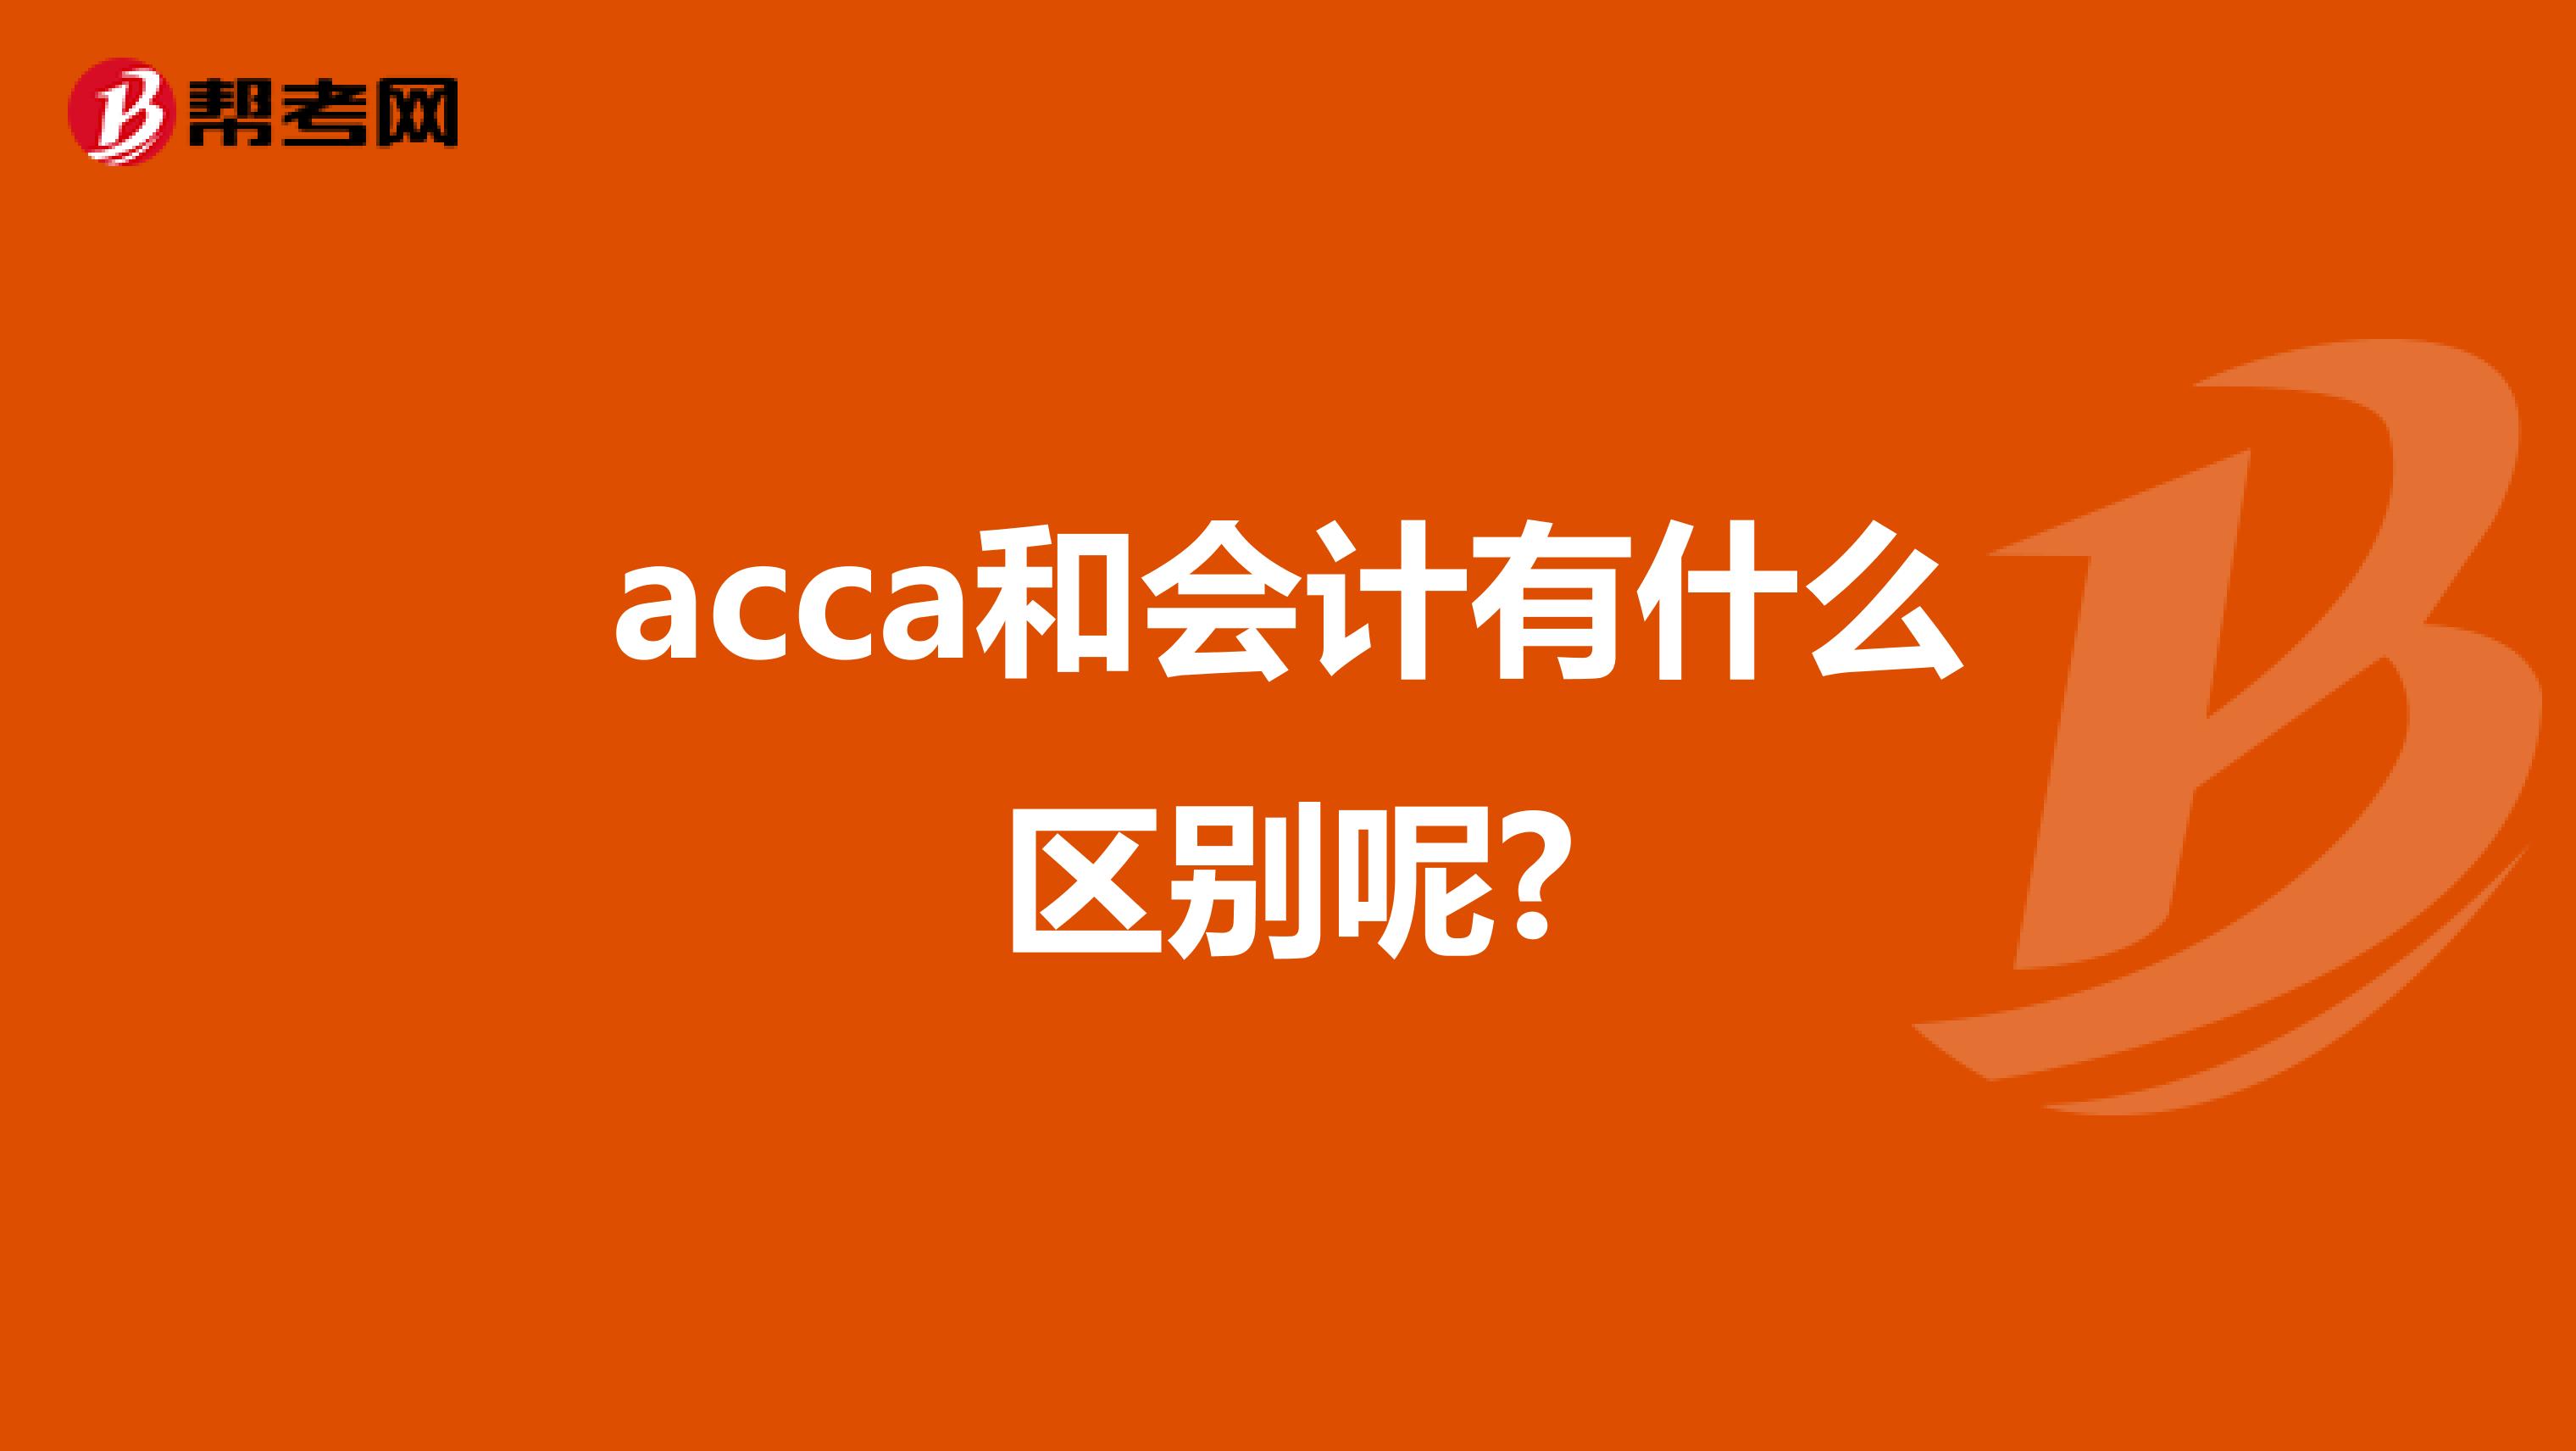 acca和会计有什么区别呢?